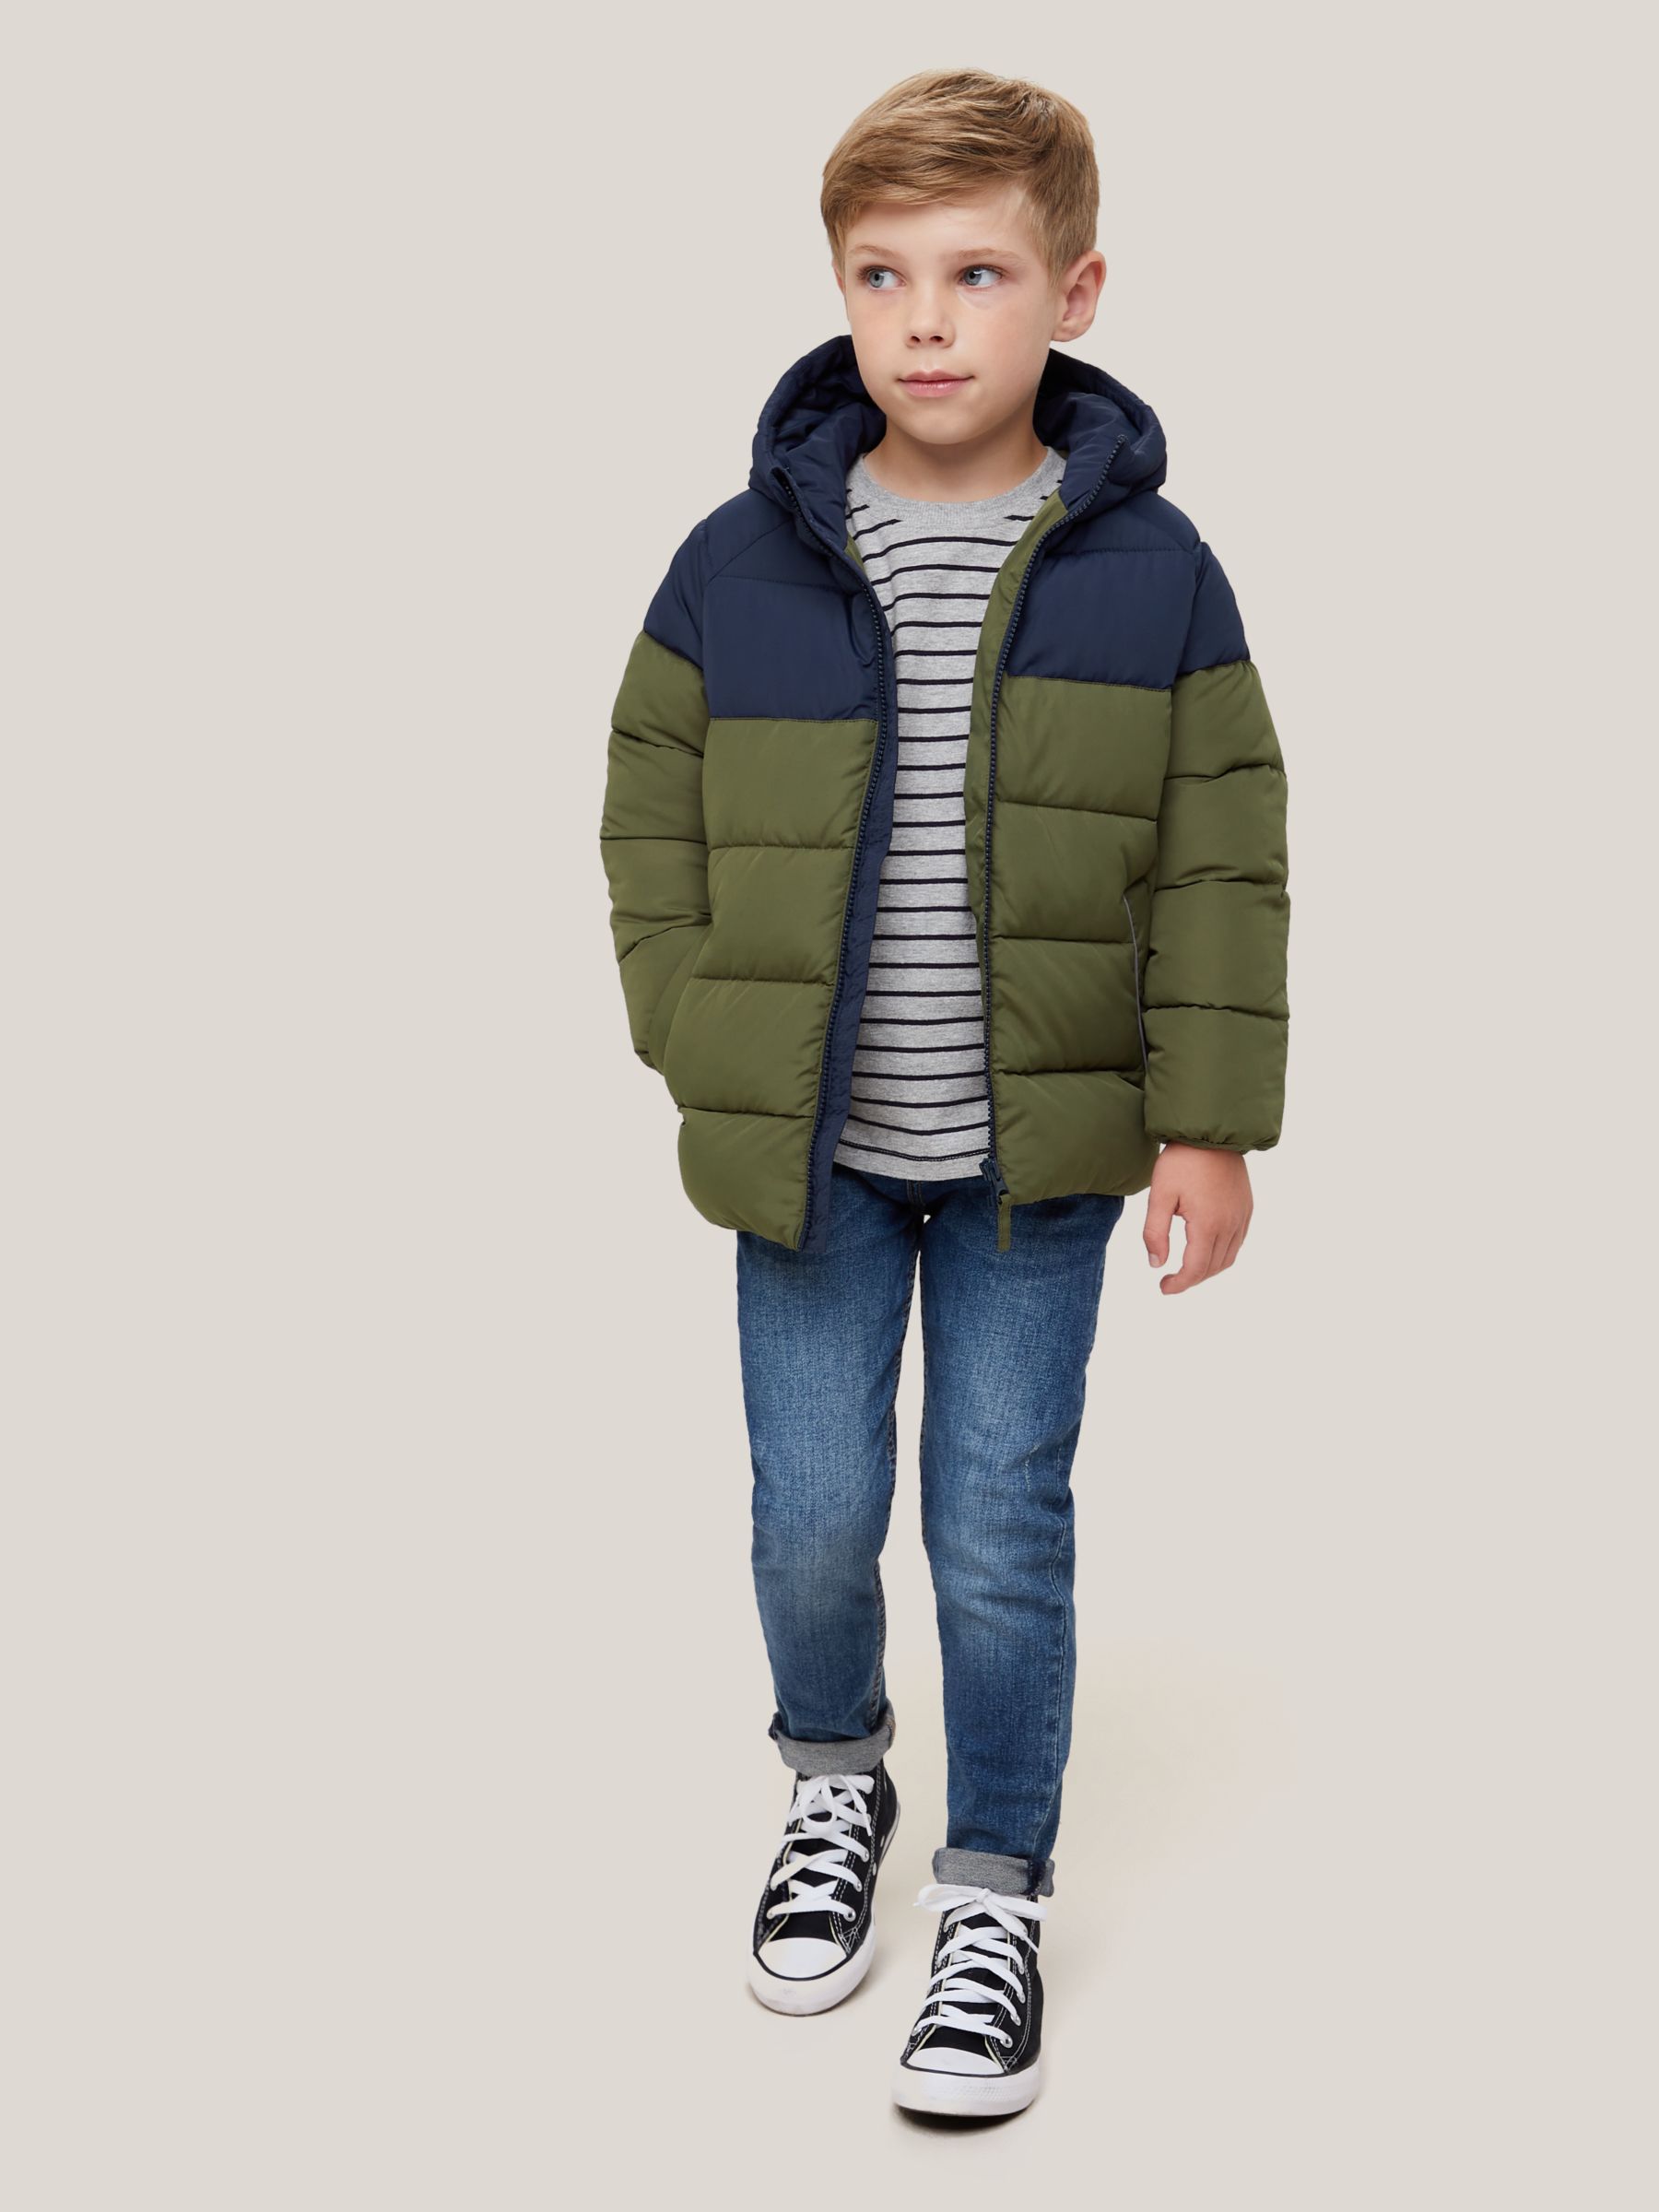 John Lewis & Partners Kids' Colour Block Padded Jacket